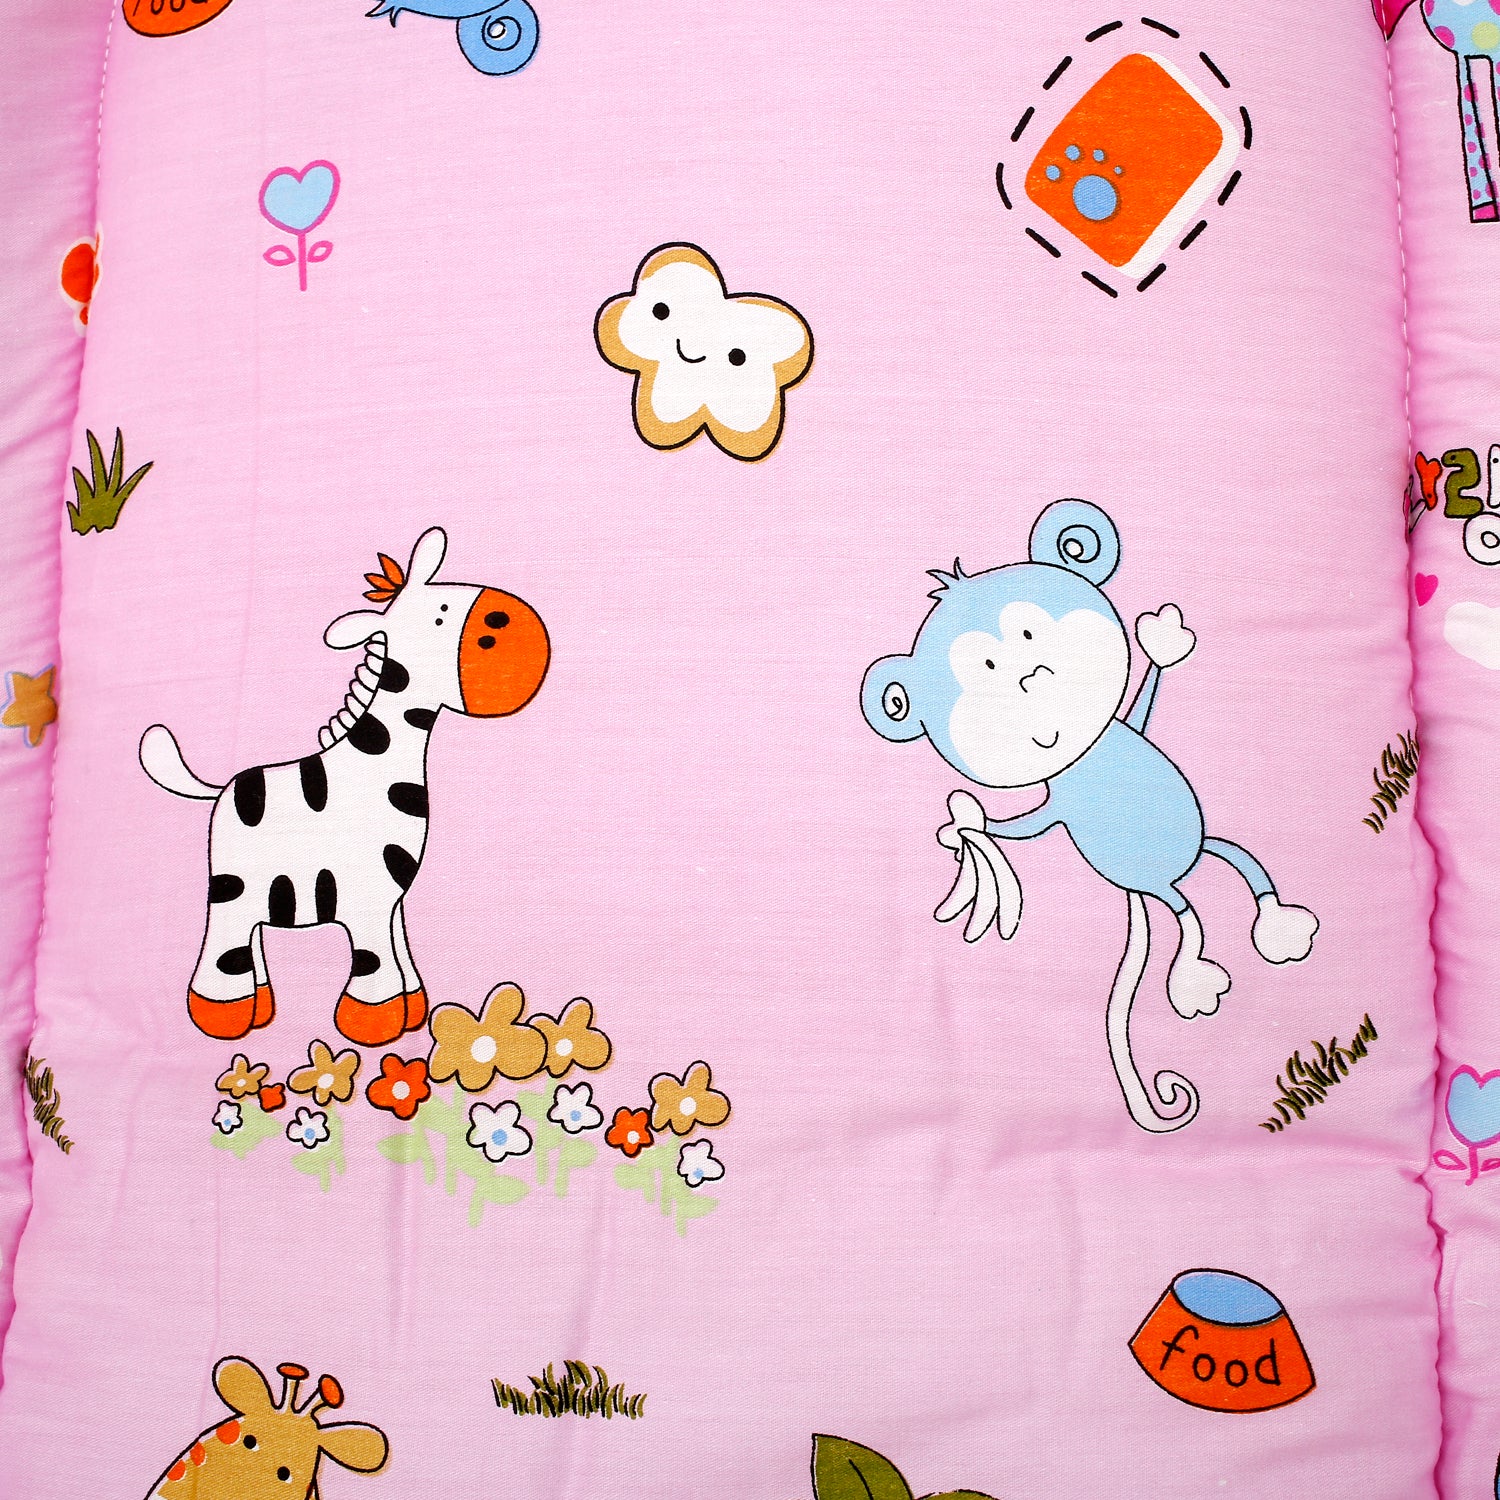 Mosquito Net Tent Mattress Set With Neck Pillow Savanna Ooh Na Na Pink - Baby Moo